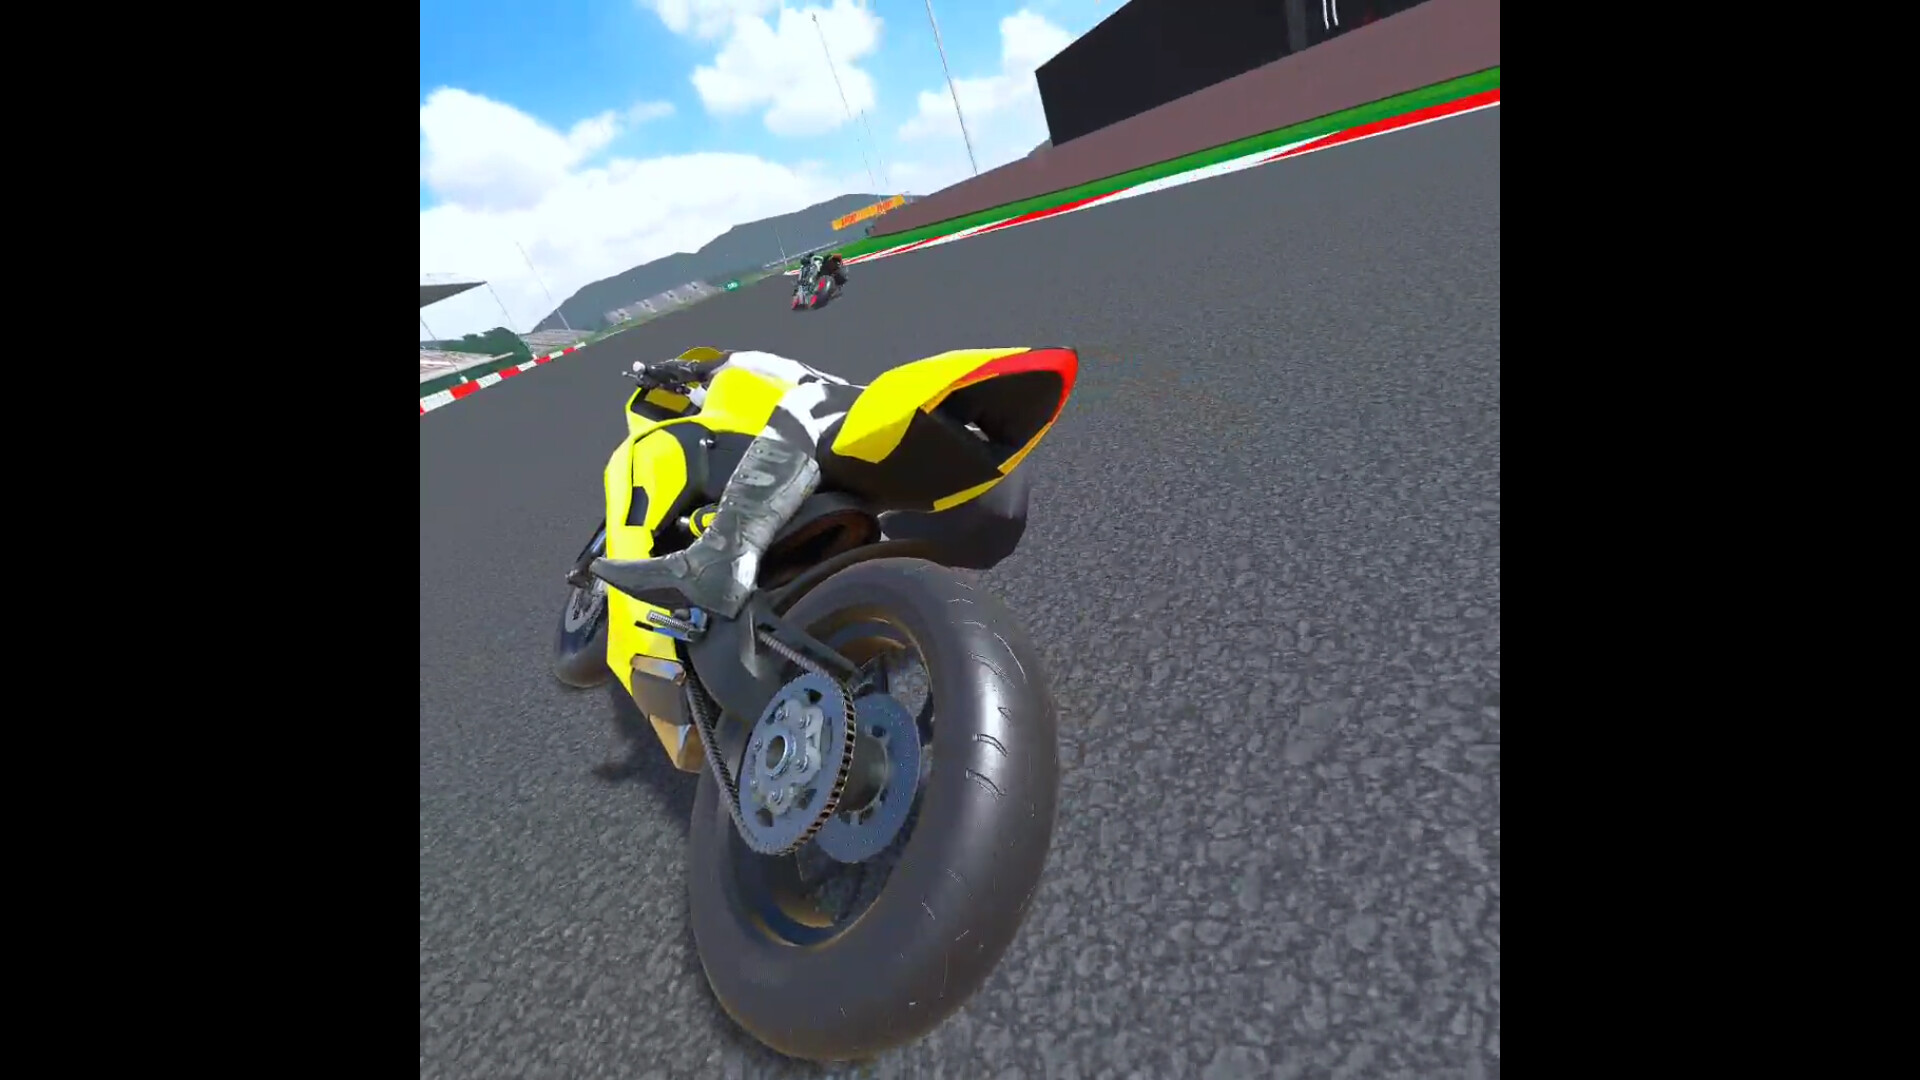 摩托车赛车 (Motorcycle Racing VR)